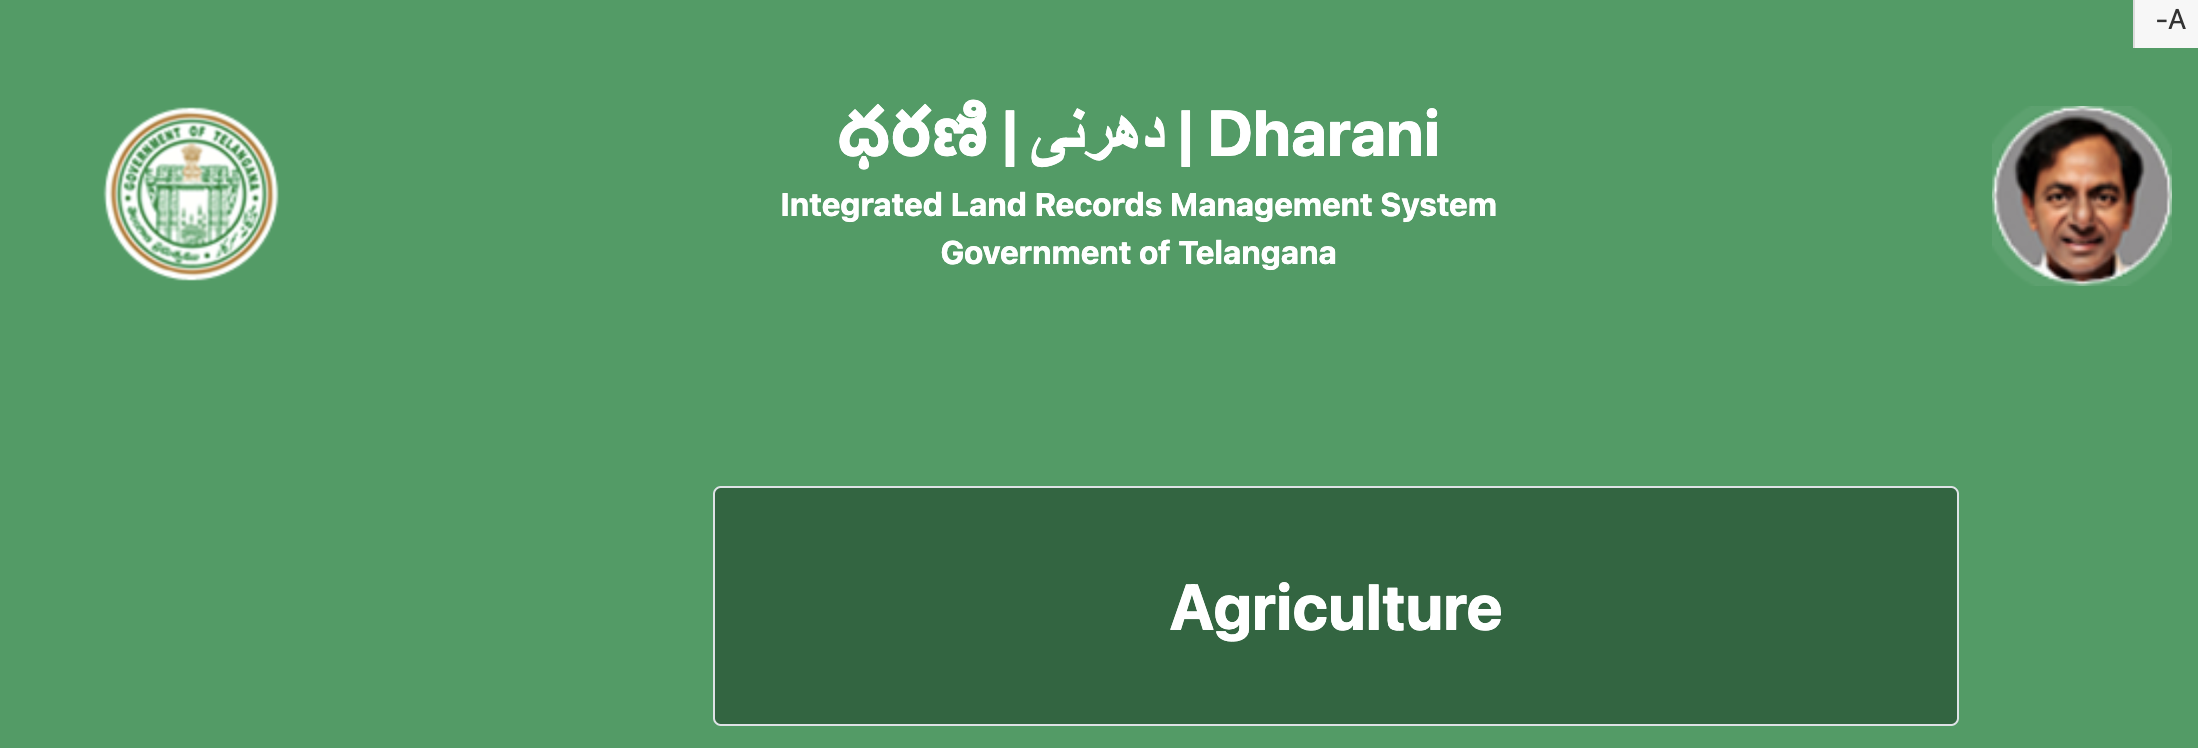 Telangana Dharani Portal for all Land Particulars